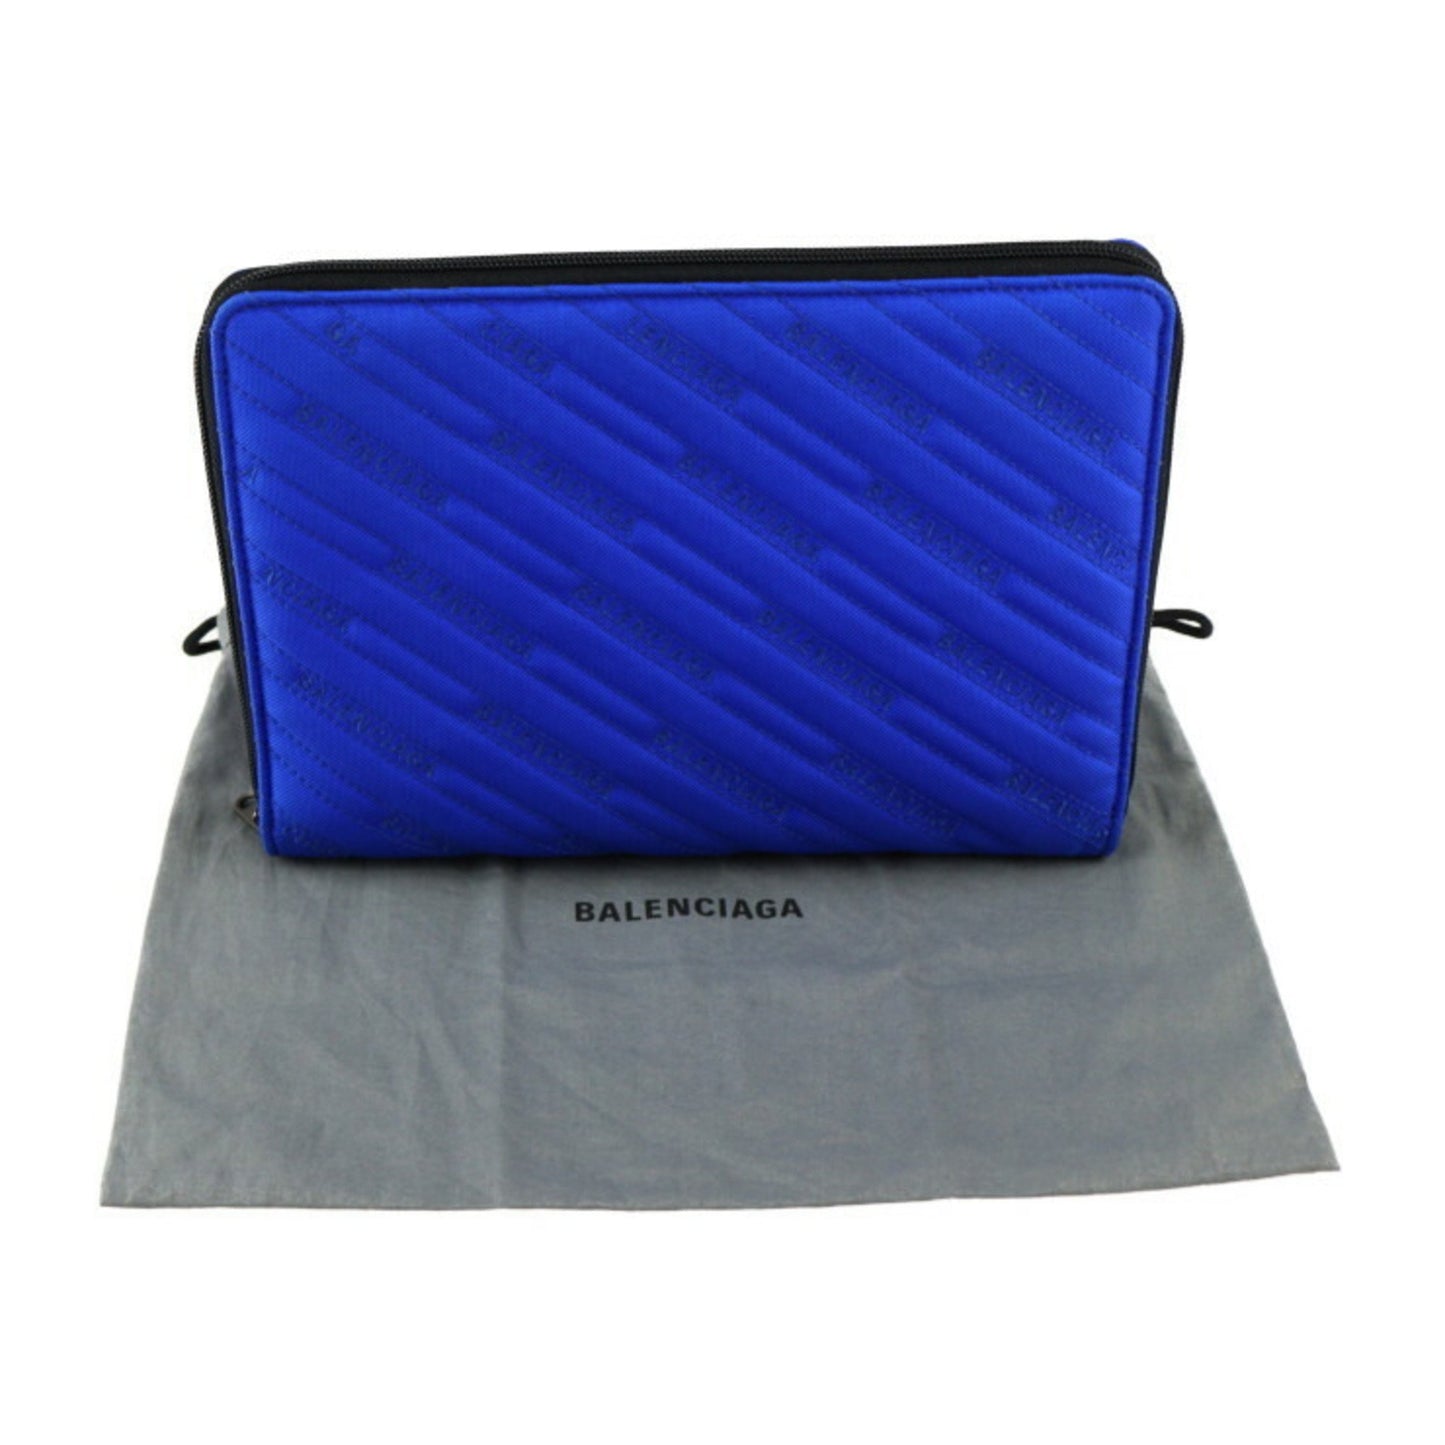 Balenciaga Men's Blue Canvas Clutch Bag in Blue